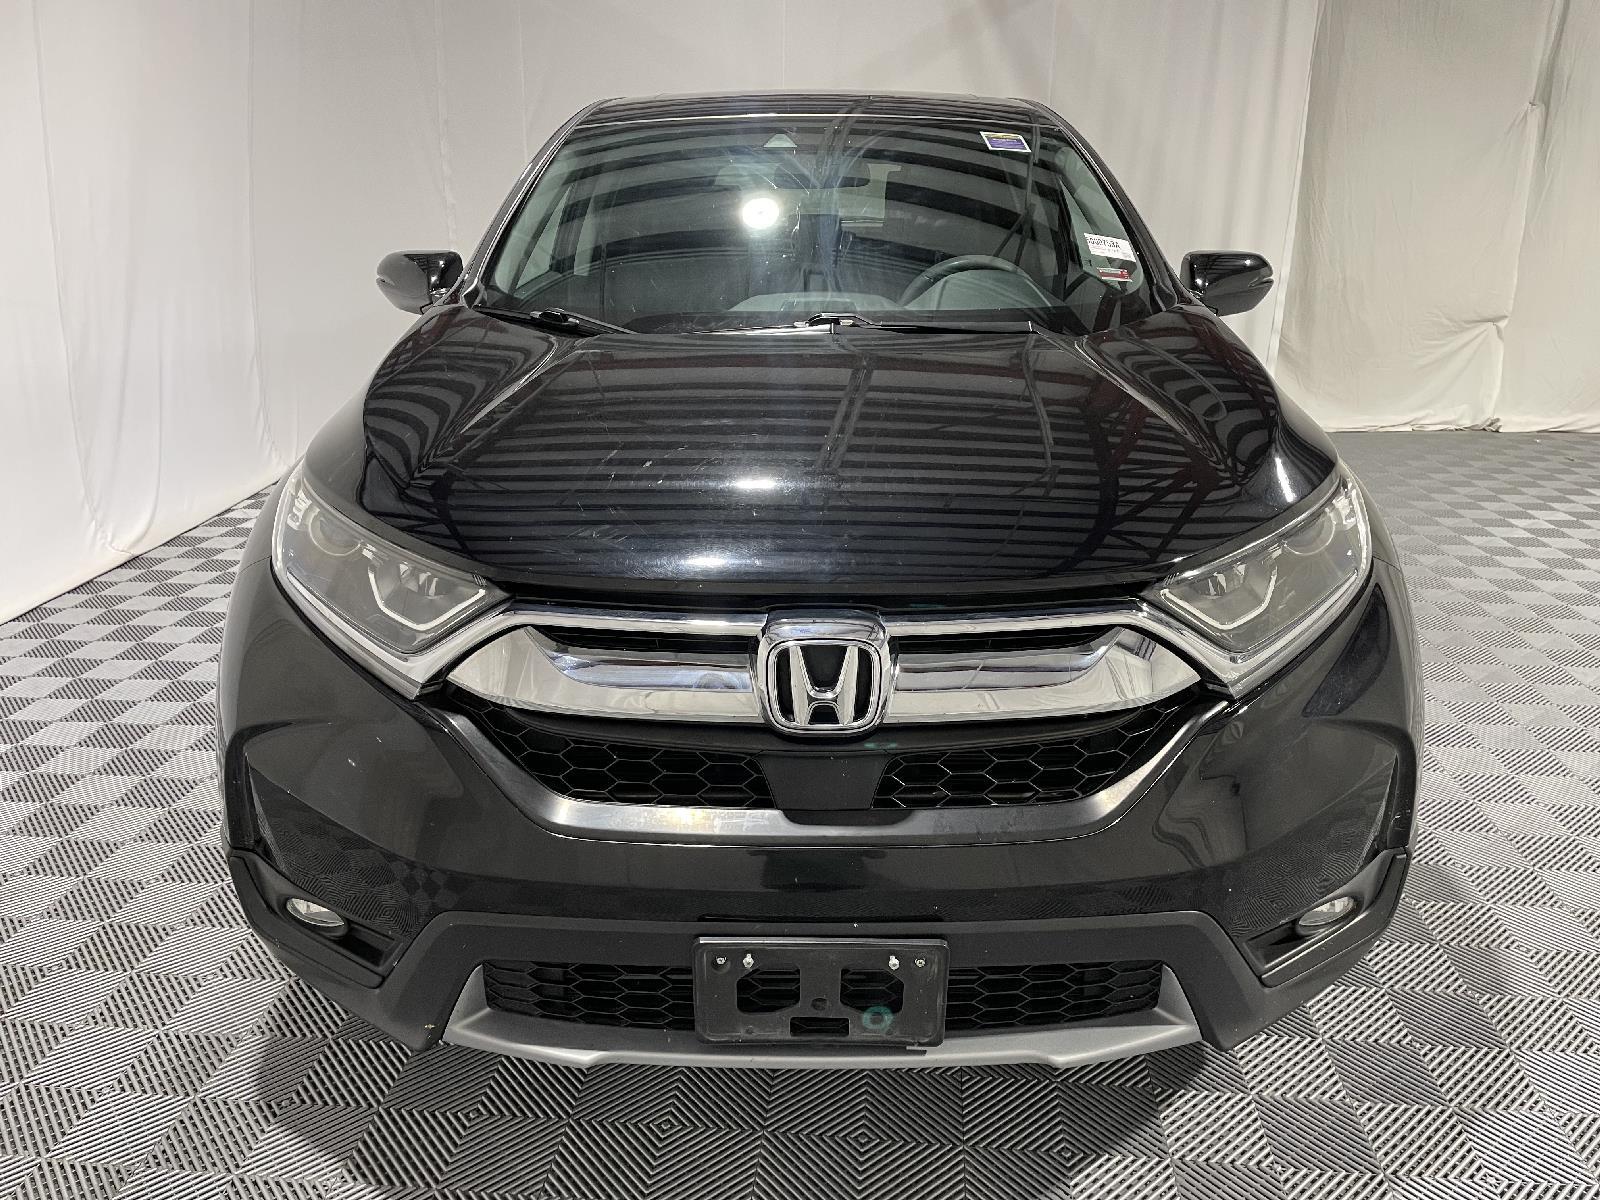 Used 2018 Honda CR-V EX SUV for sale in St Joseph MO